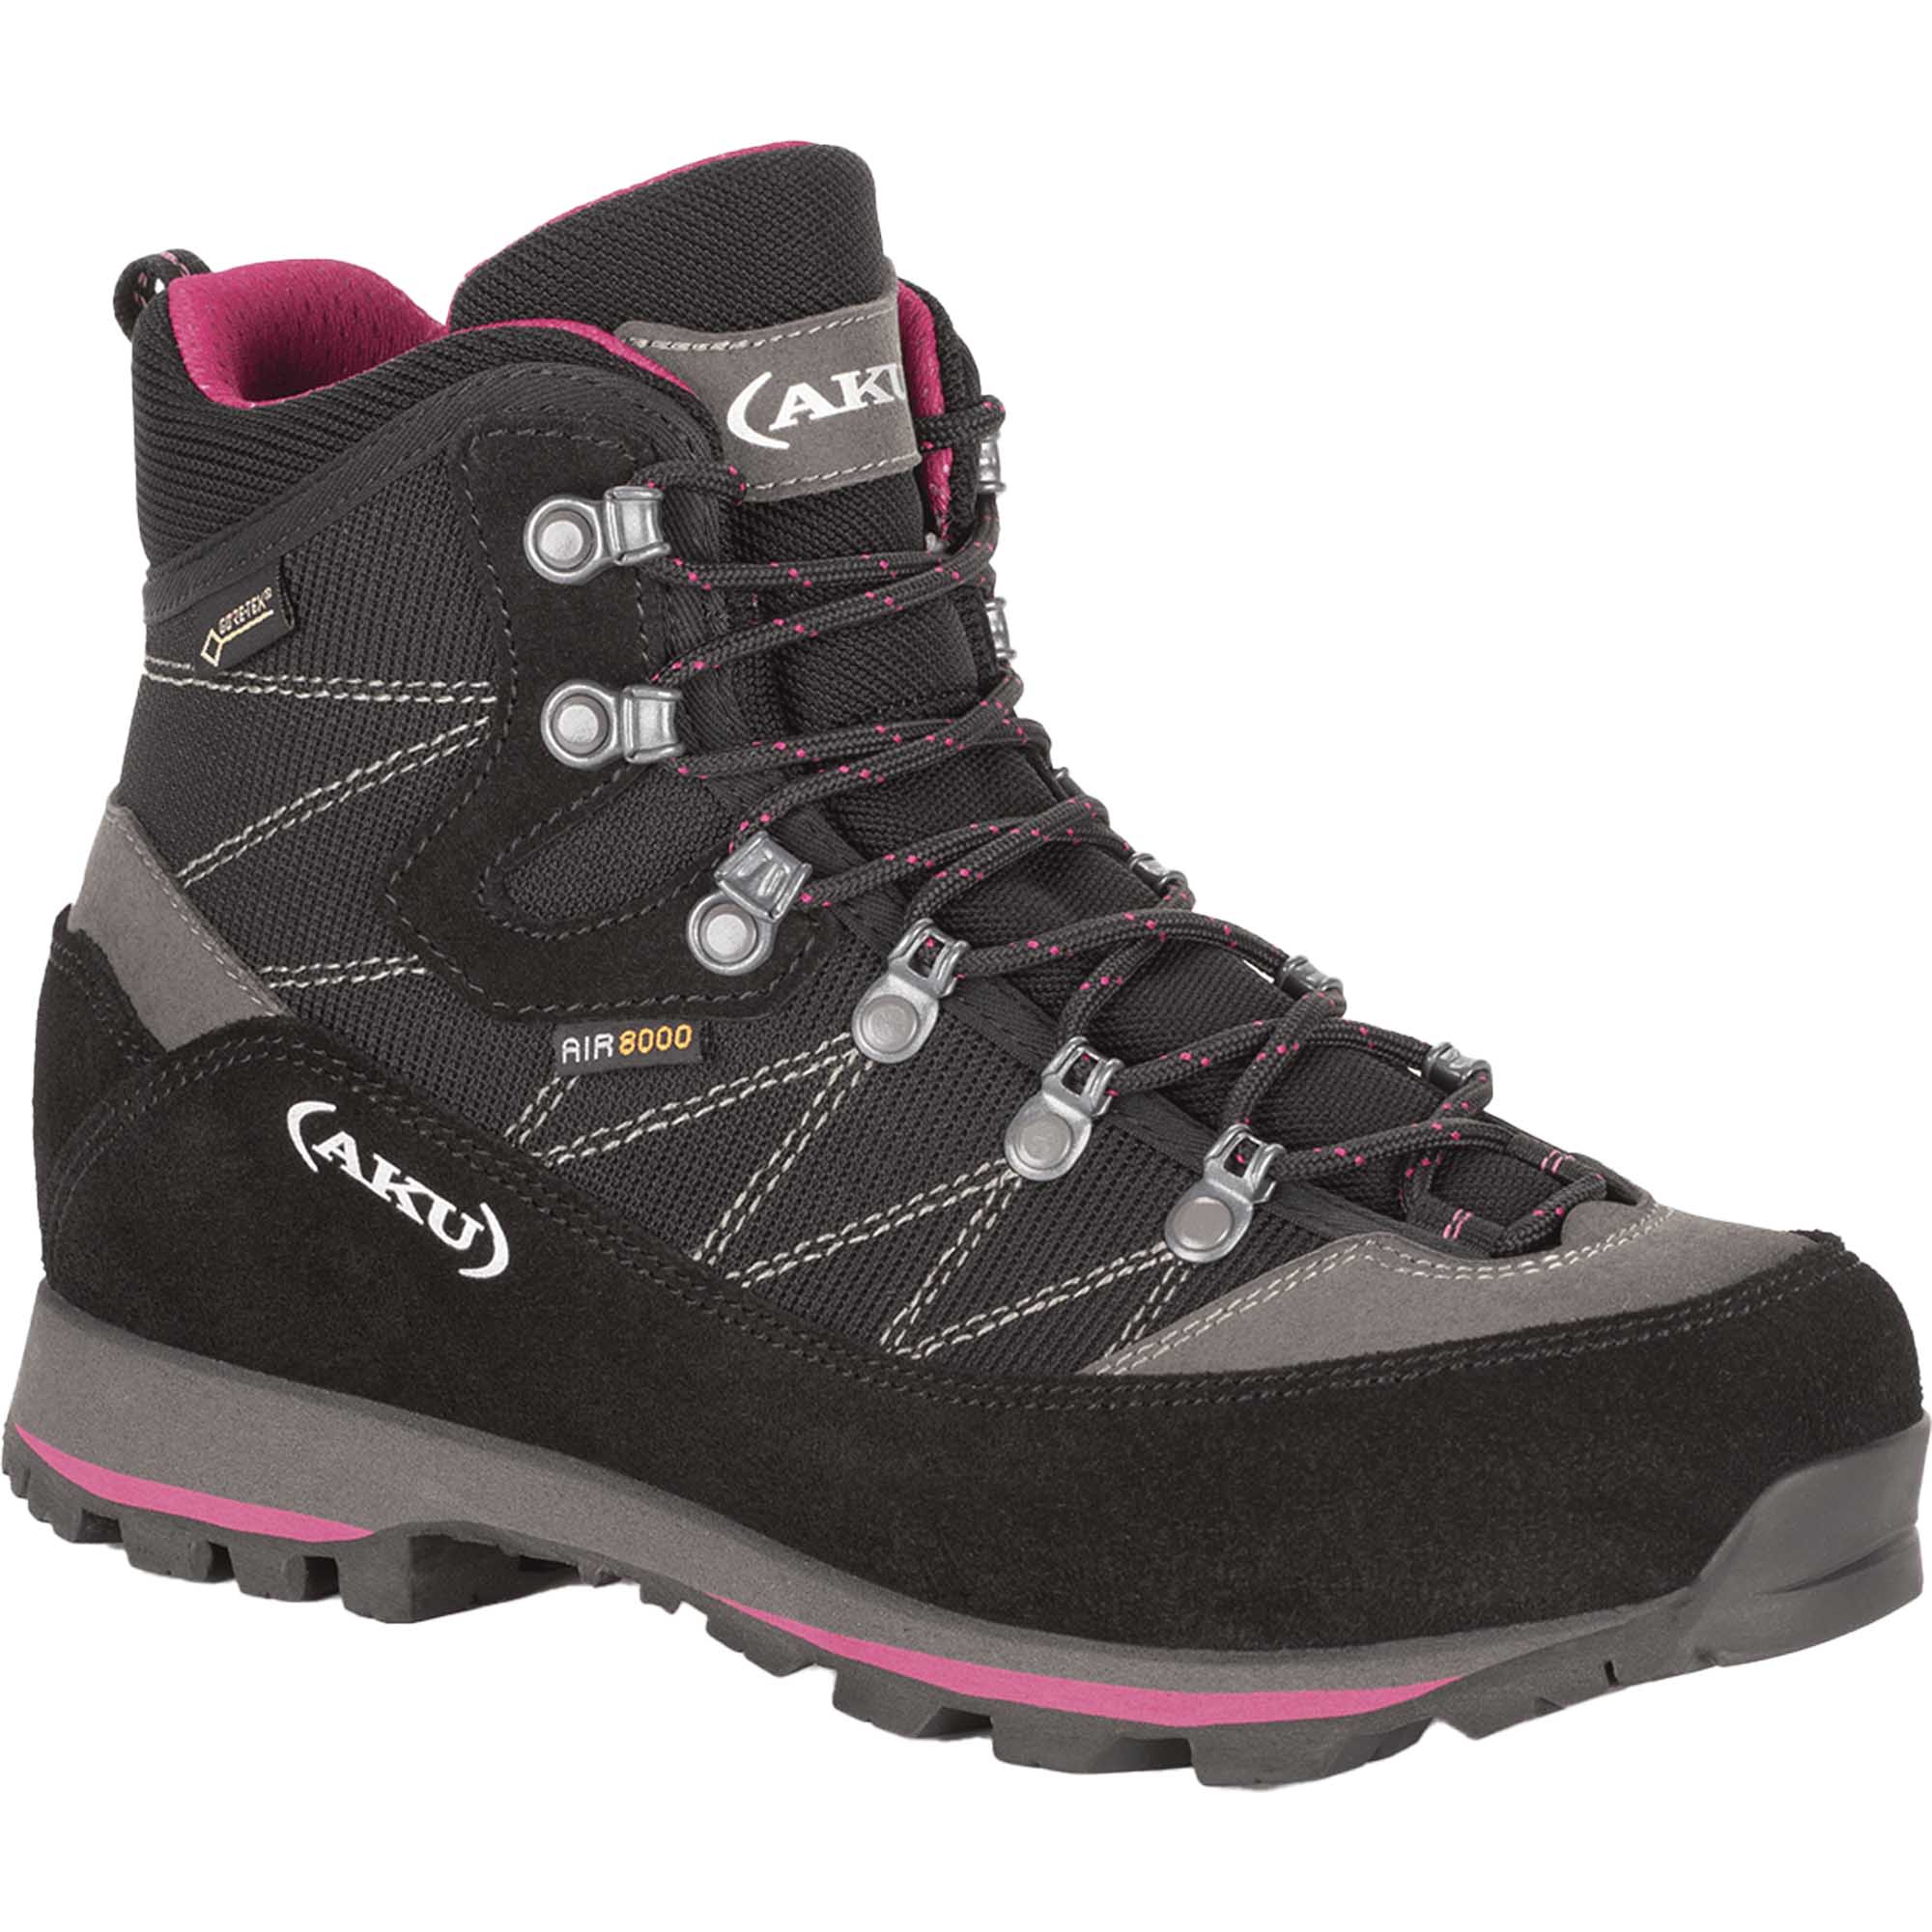 Aku Trekker Lite III GTX Women's Hiking Boots